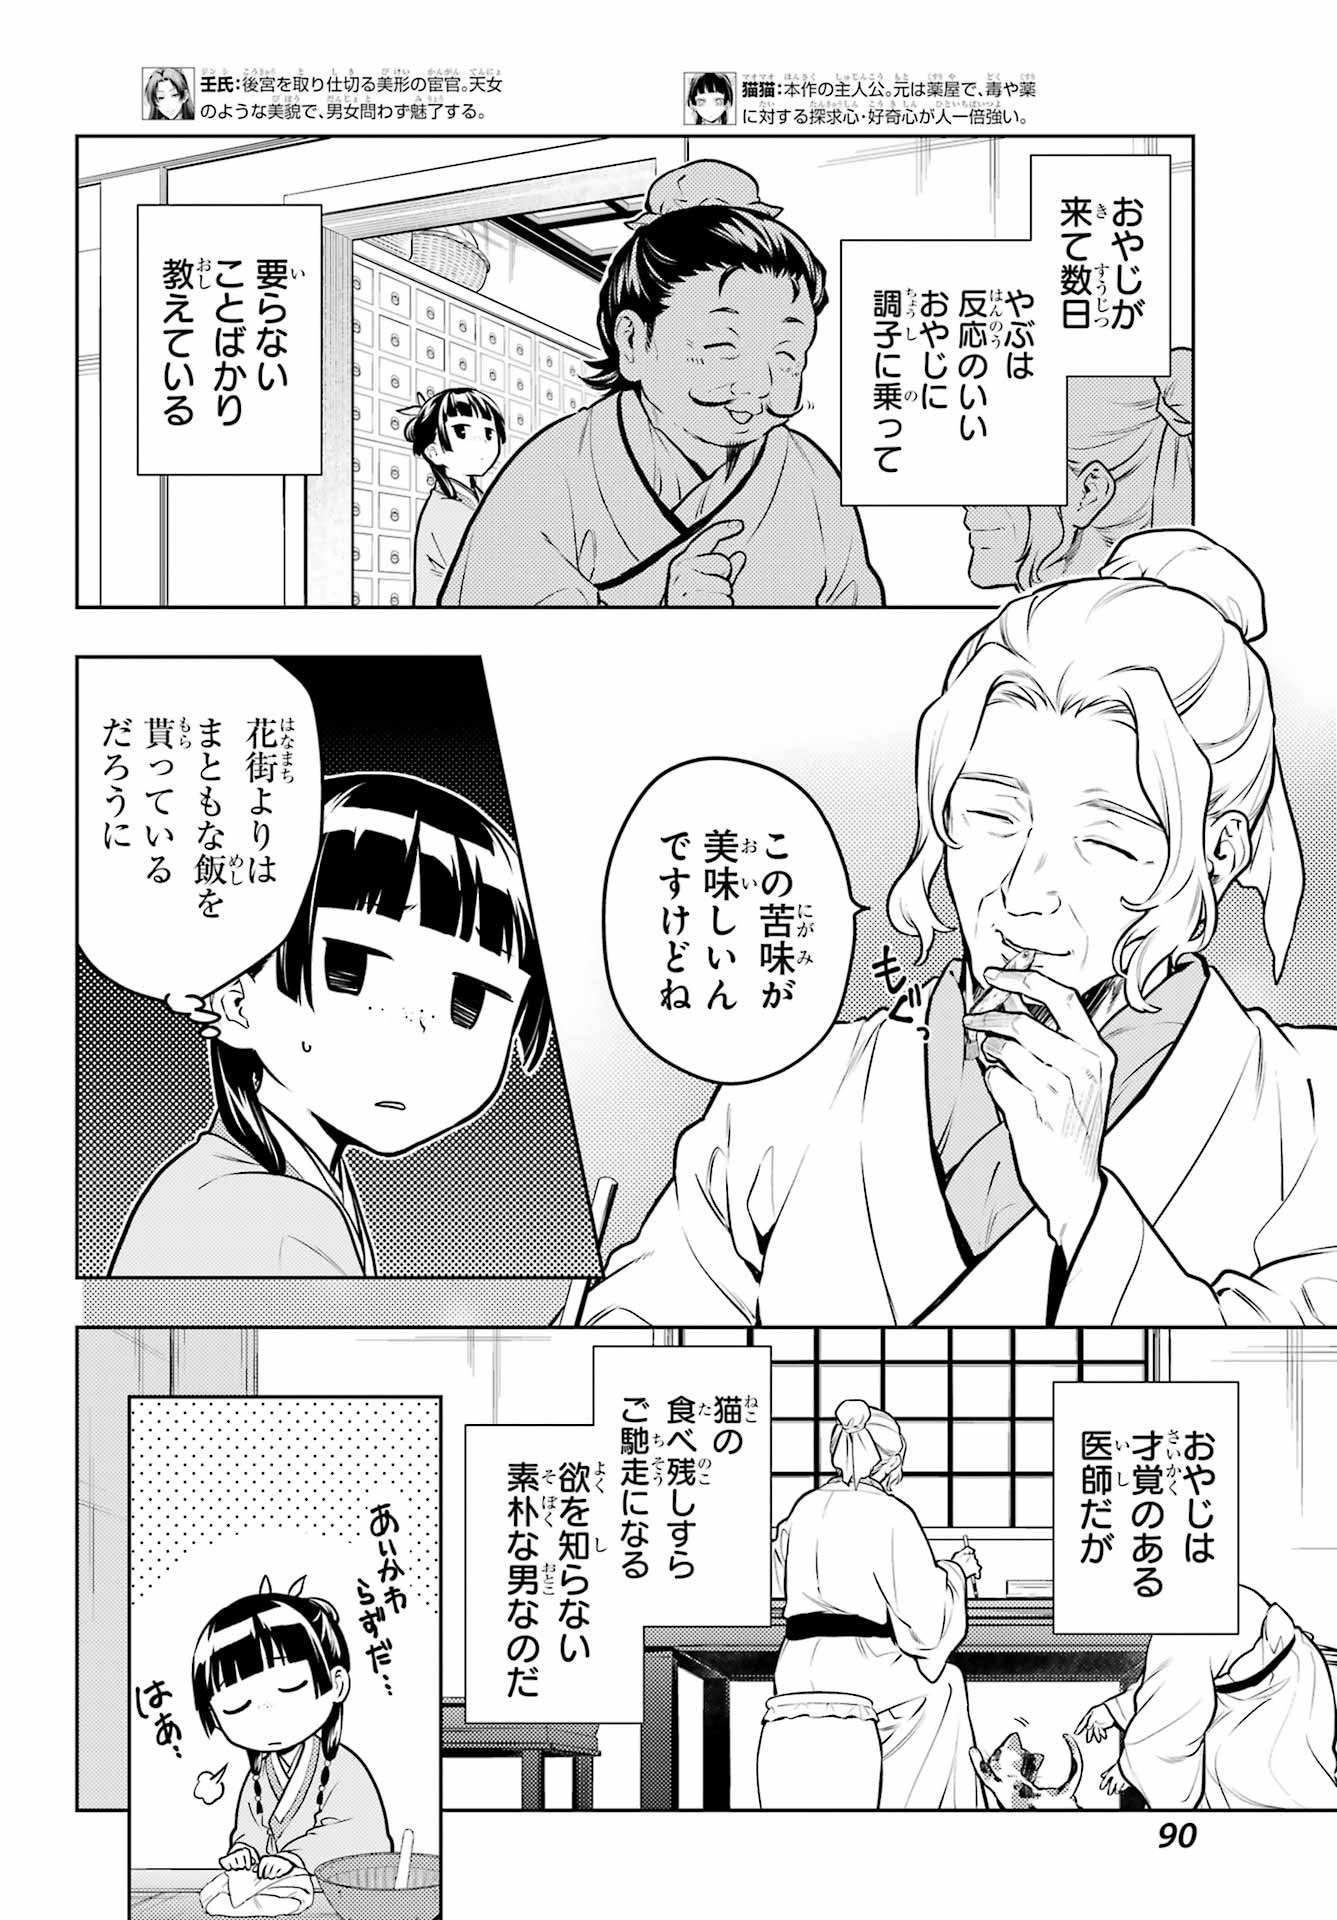 Kusuriya no Hitorigoto - Chapter 70 - Page 2